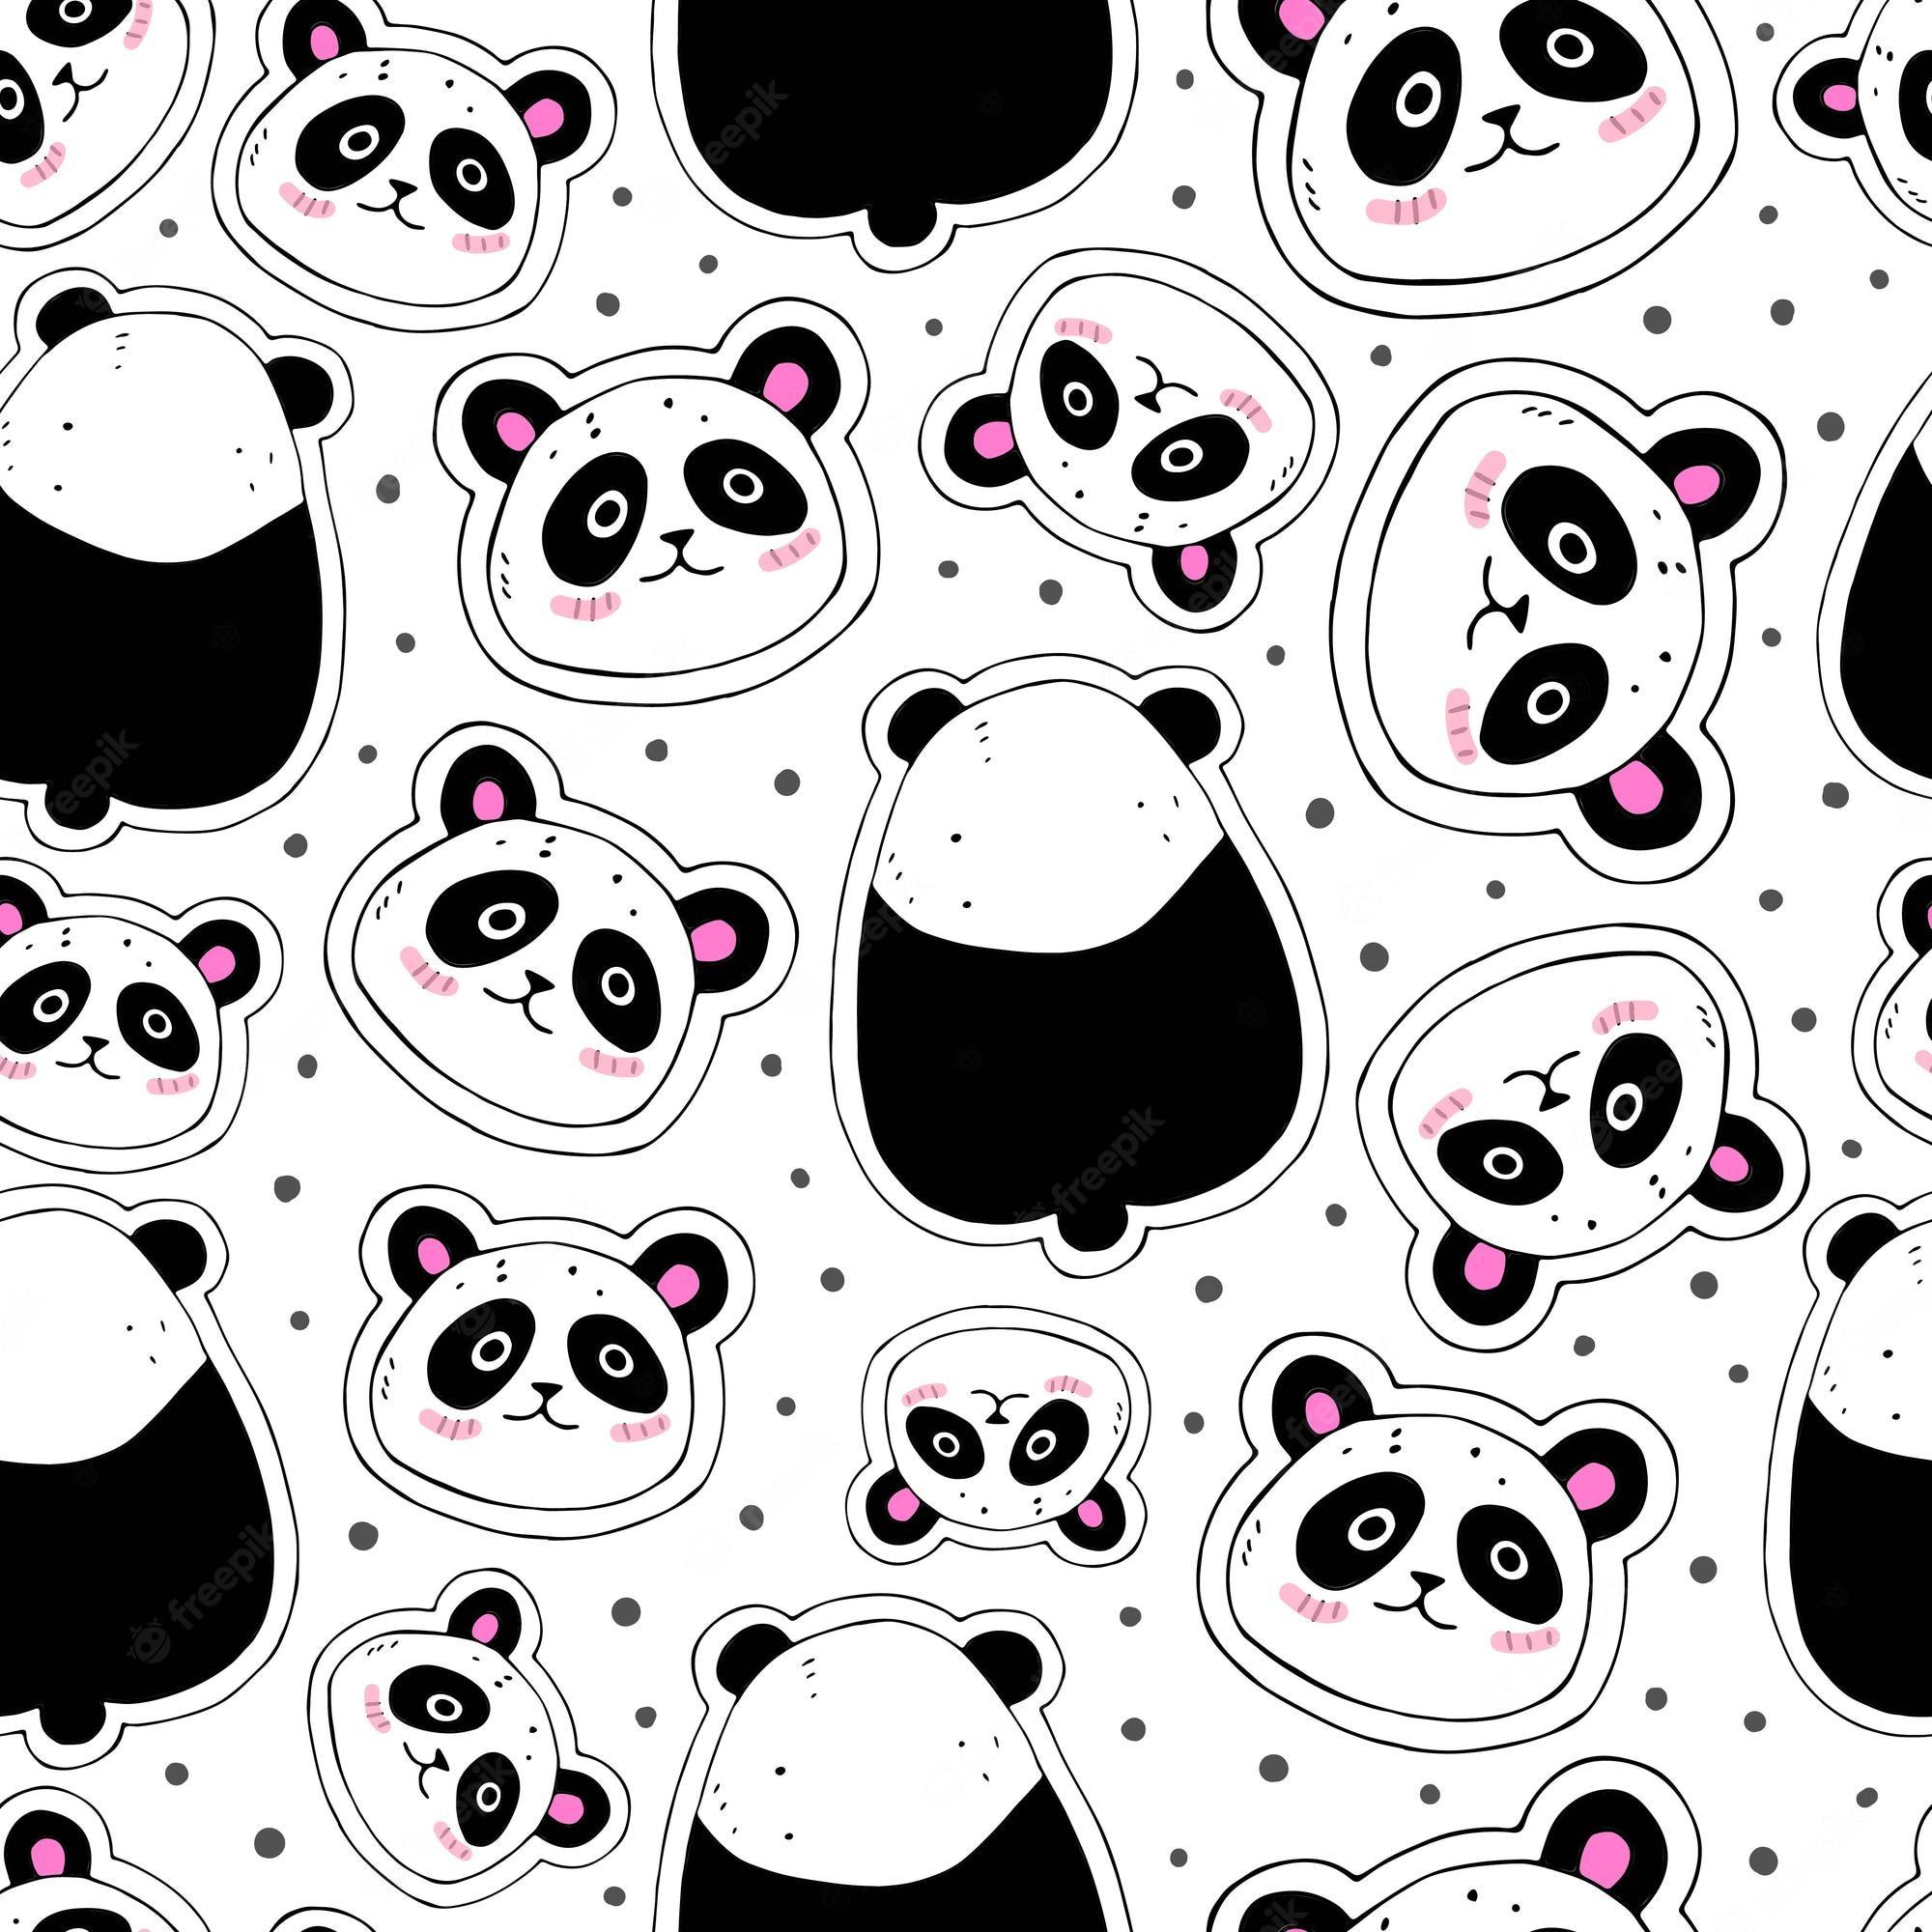 Black and White Panda Wallpapers - Top Free Black and White Panda ...